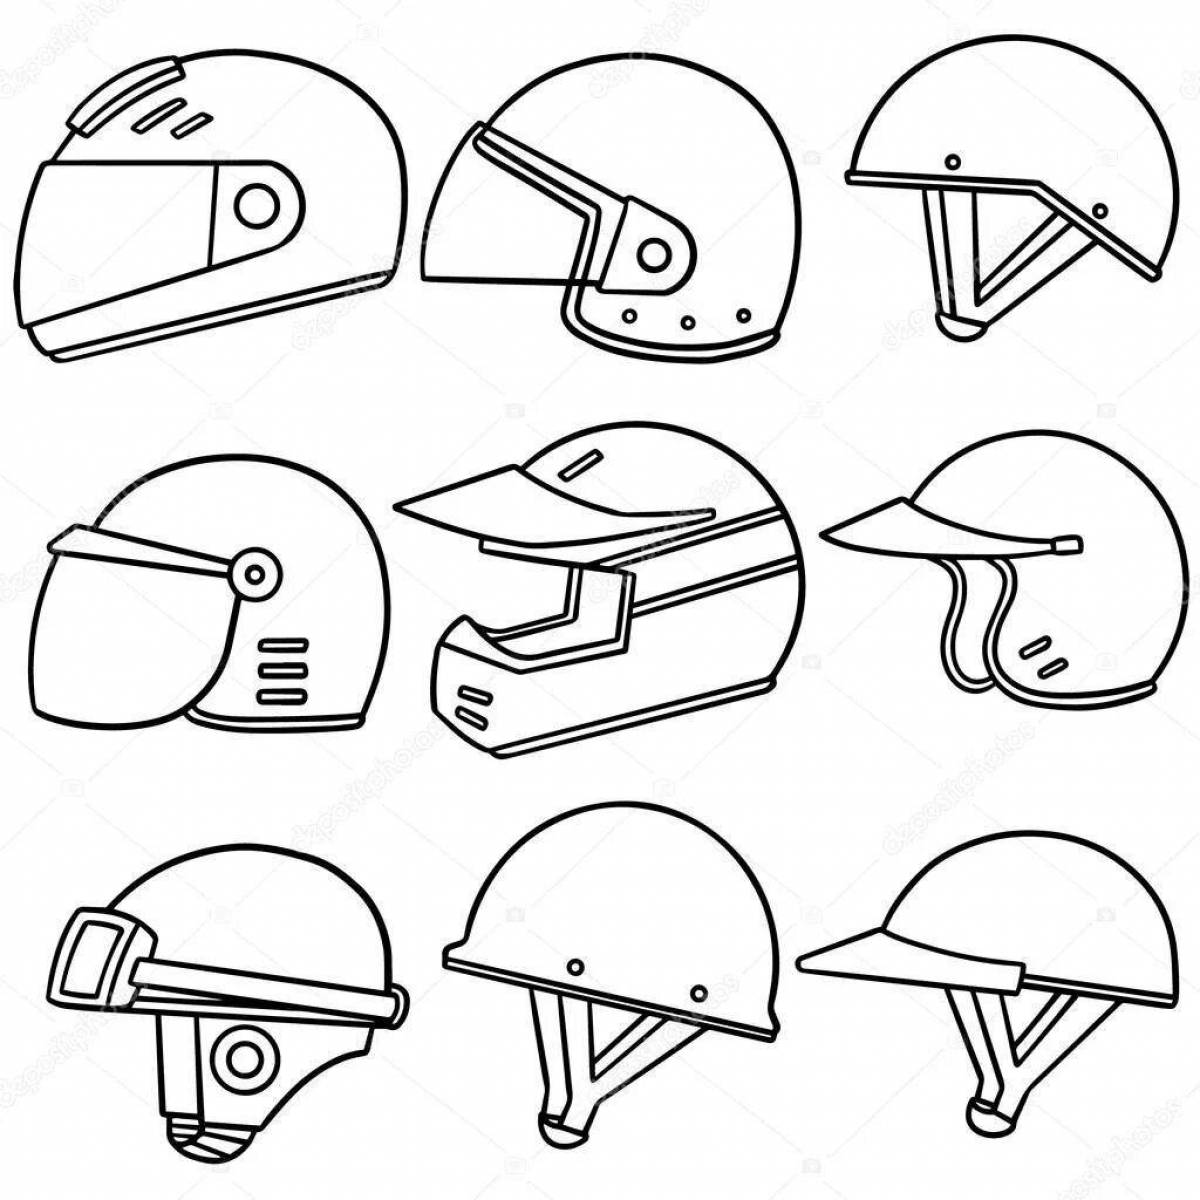 Coloring page stimulating motorcycle helmet